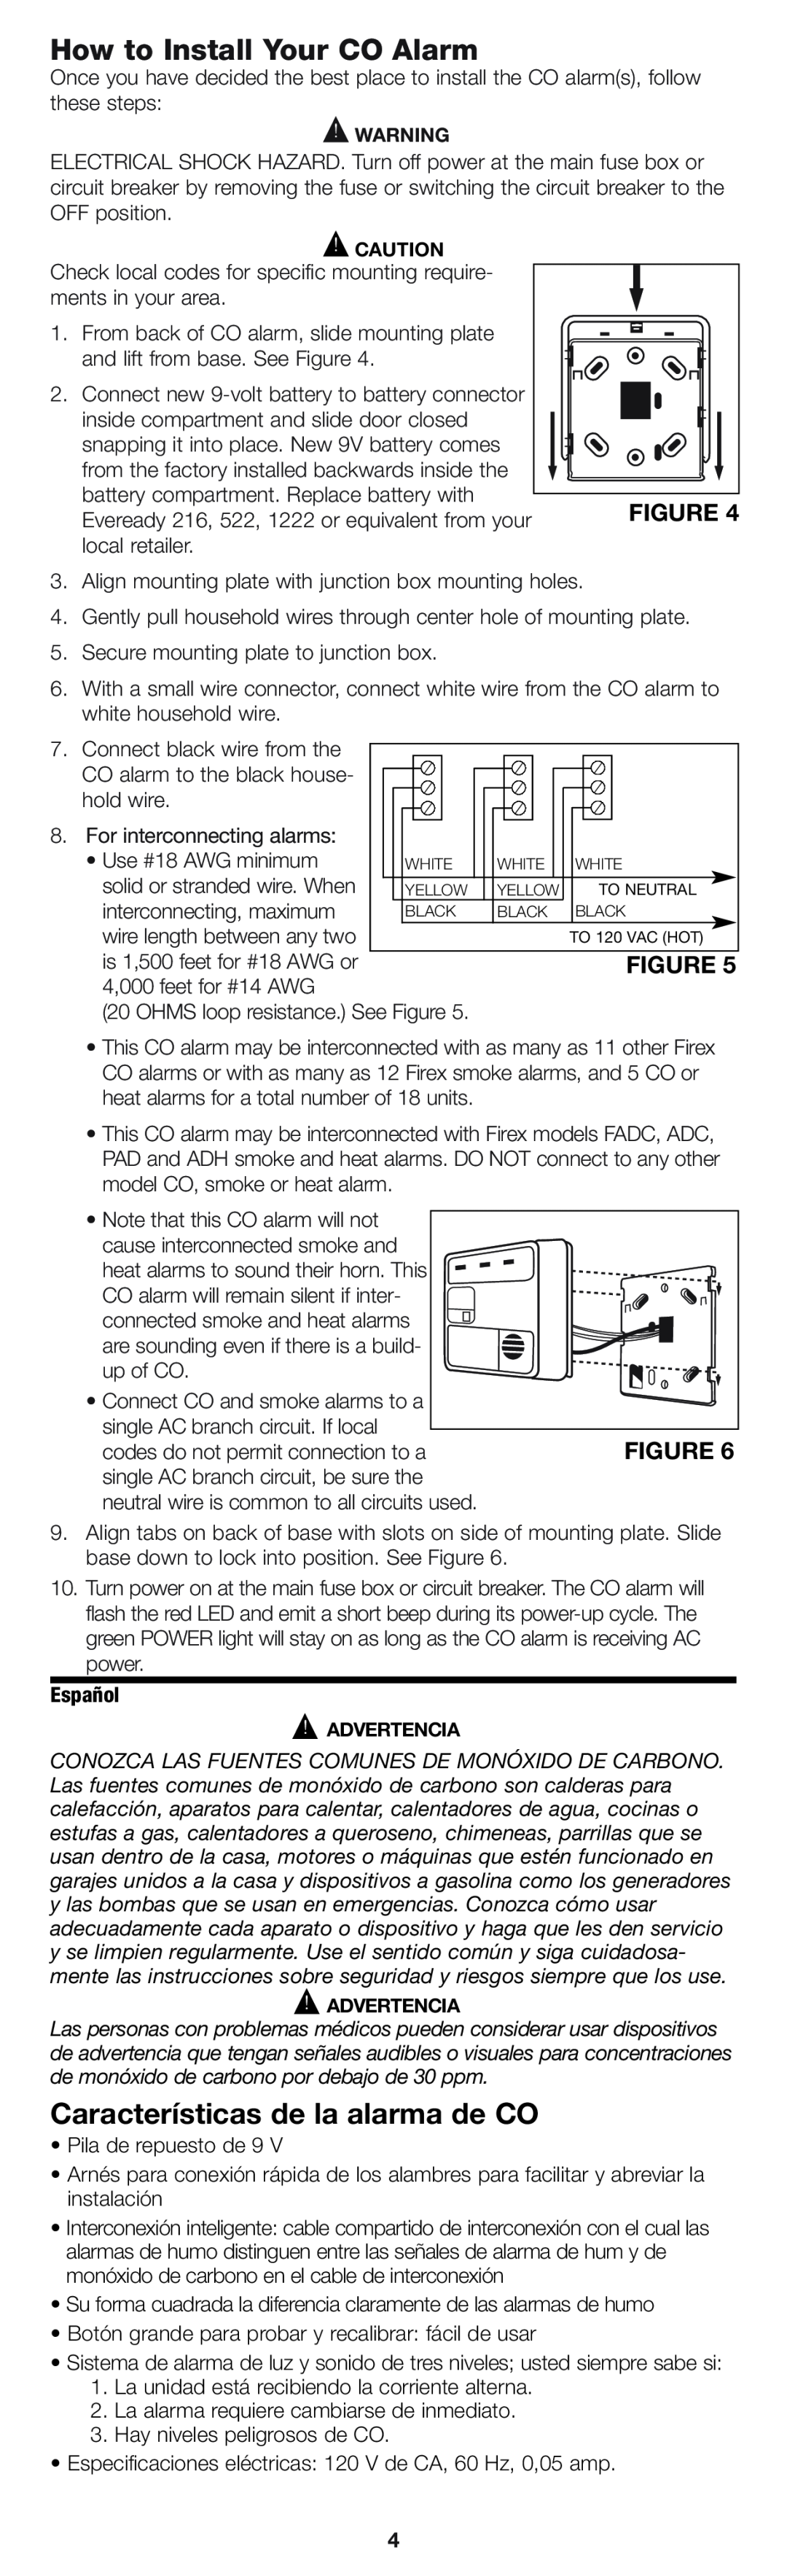 Firex pmn owner manual How to Install Your CO Alarm, Características de la alarma de CO 